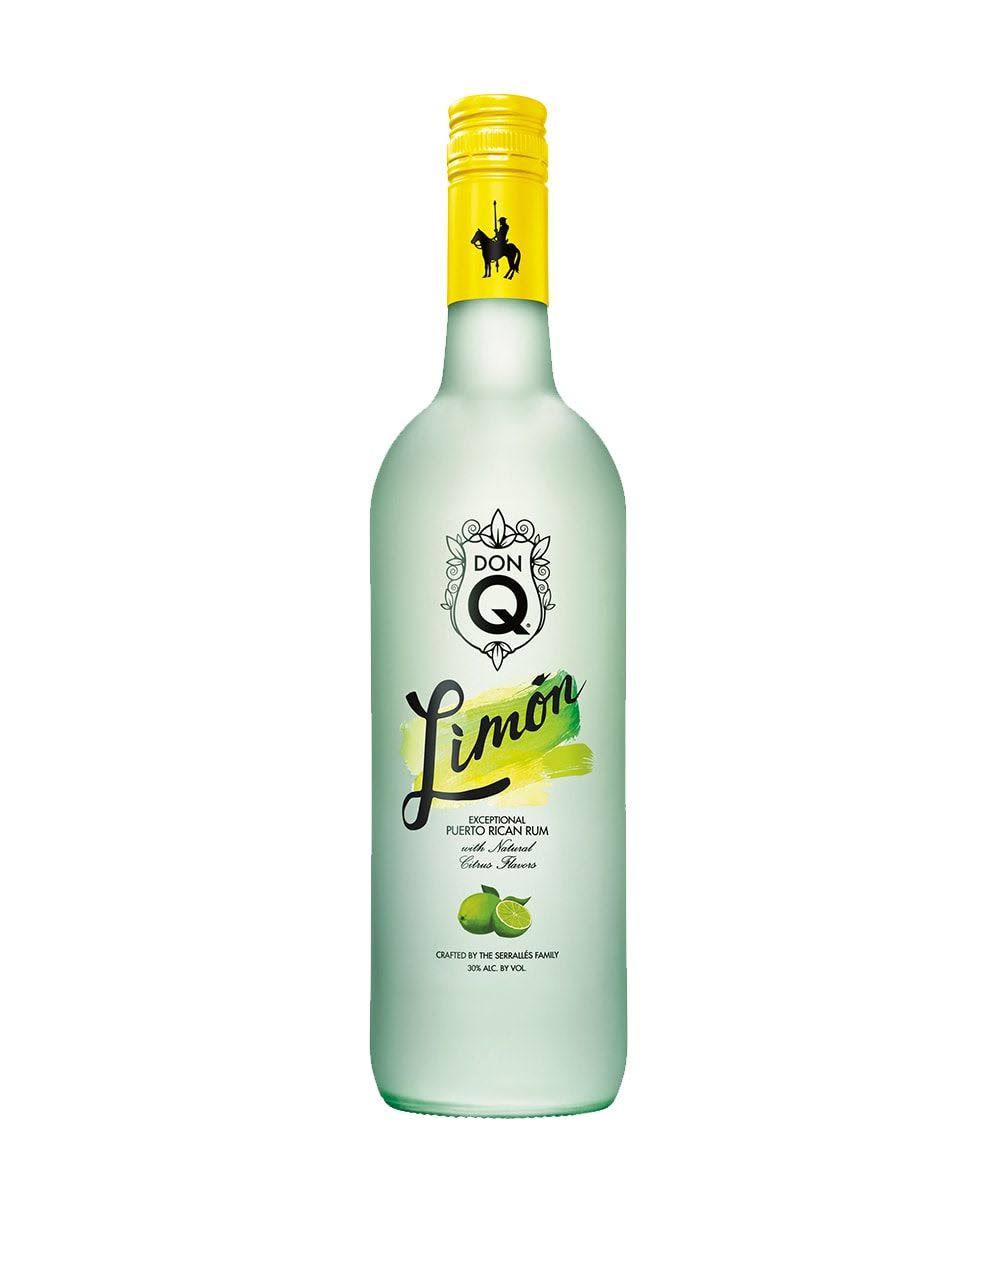 Don Q Limon Rum - 750 ml bottle